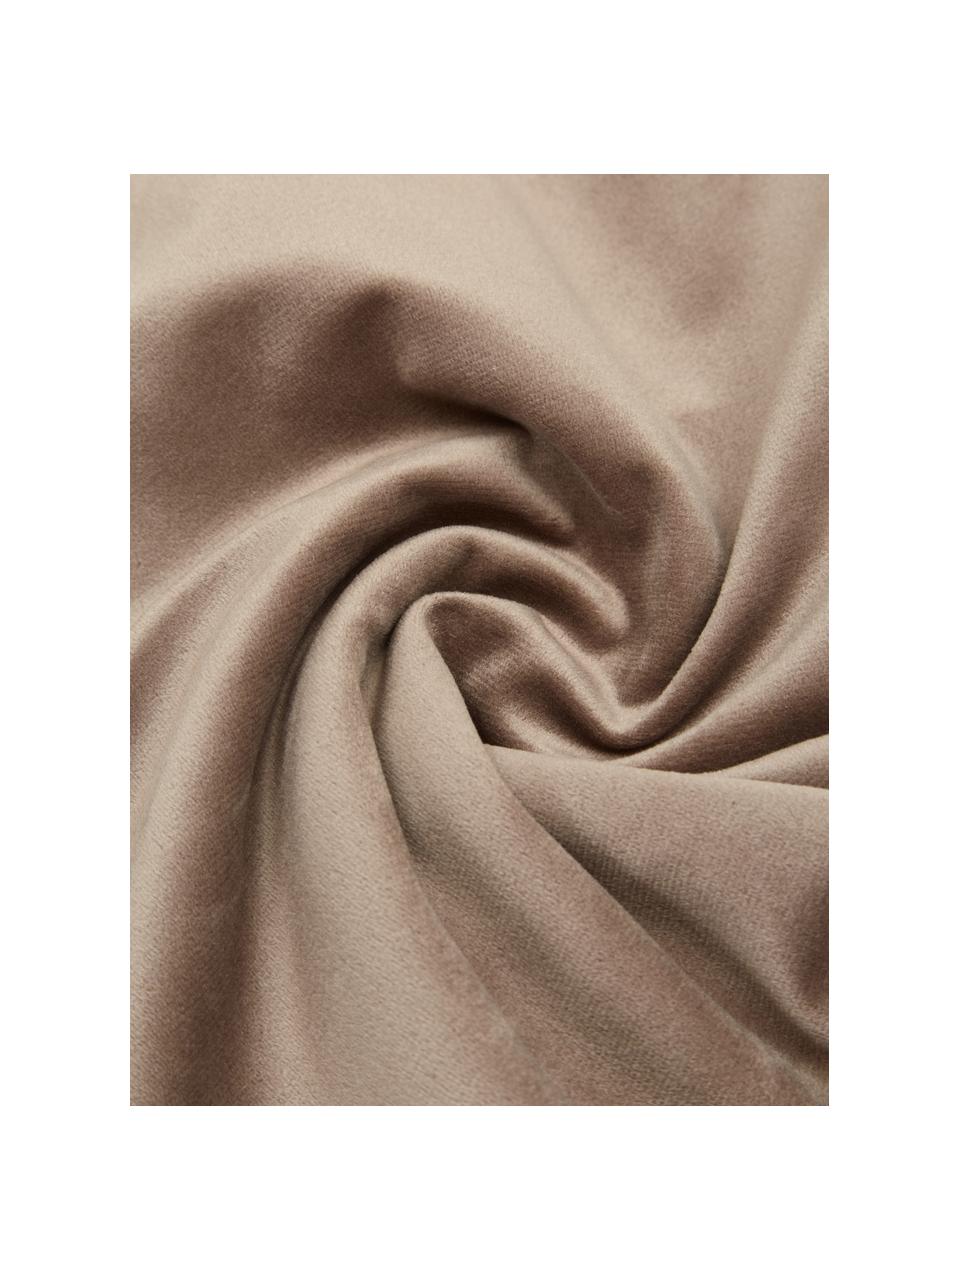 Samt-Kissenhülle Lucie mit Struktur-Oberfläche, 100% Samt (Polyester), Taupe, B 45 x L 45 cm